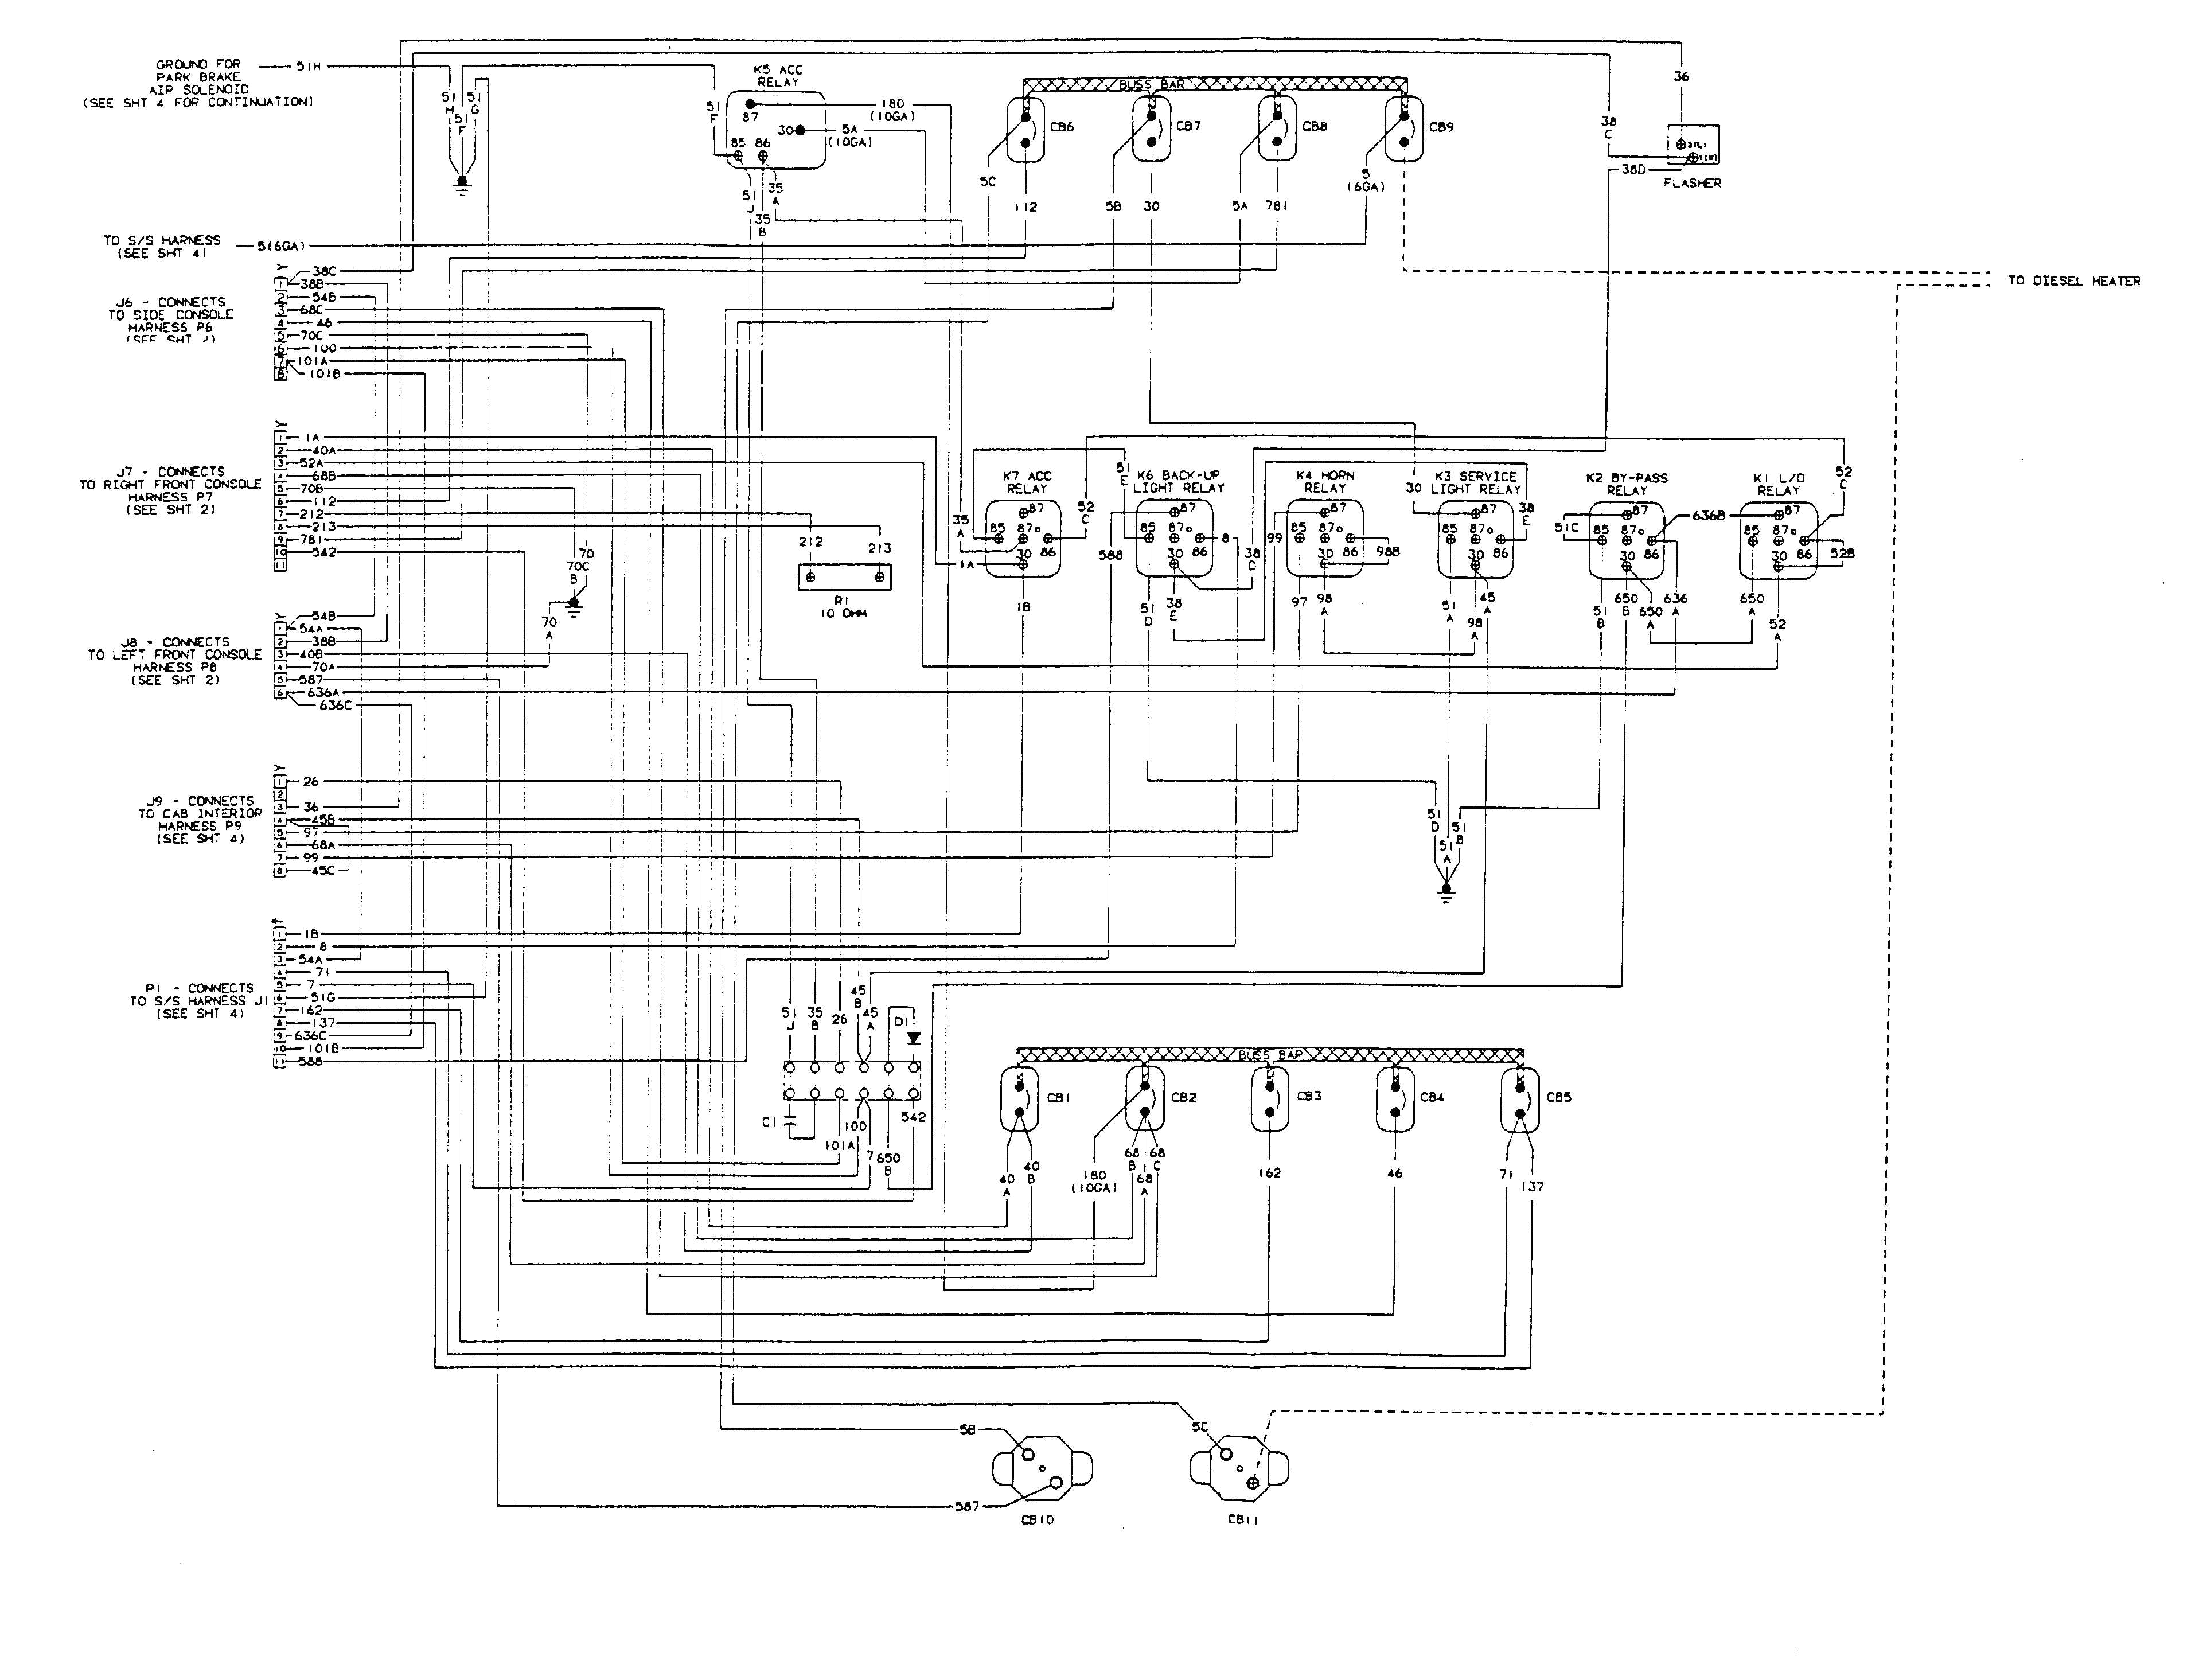 wiring yale diagram fork lift a295n04913k wiring diagrams bib wiring yale diagram fork lift a295n04913k data